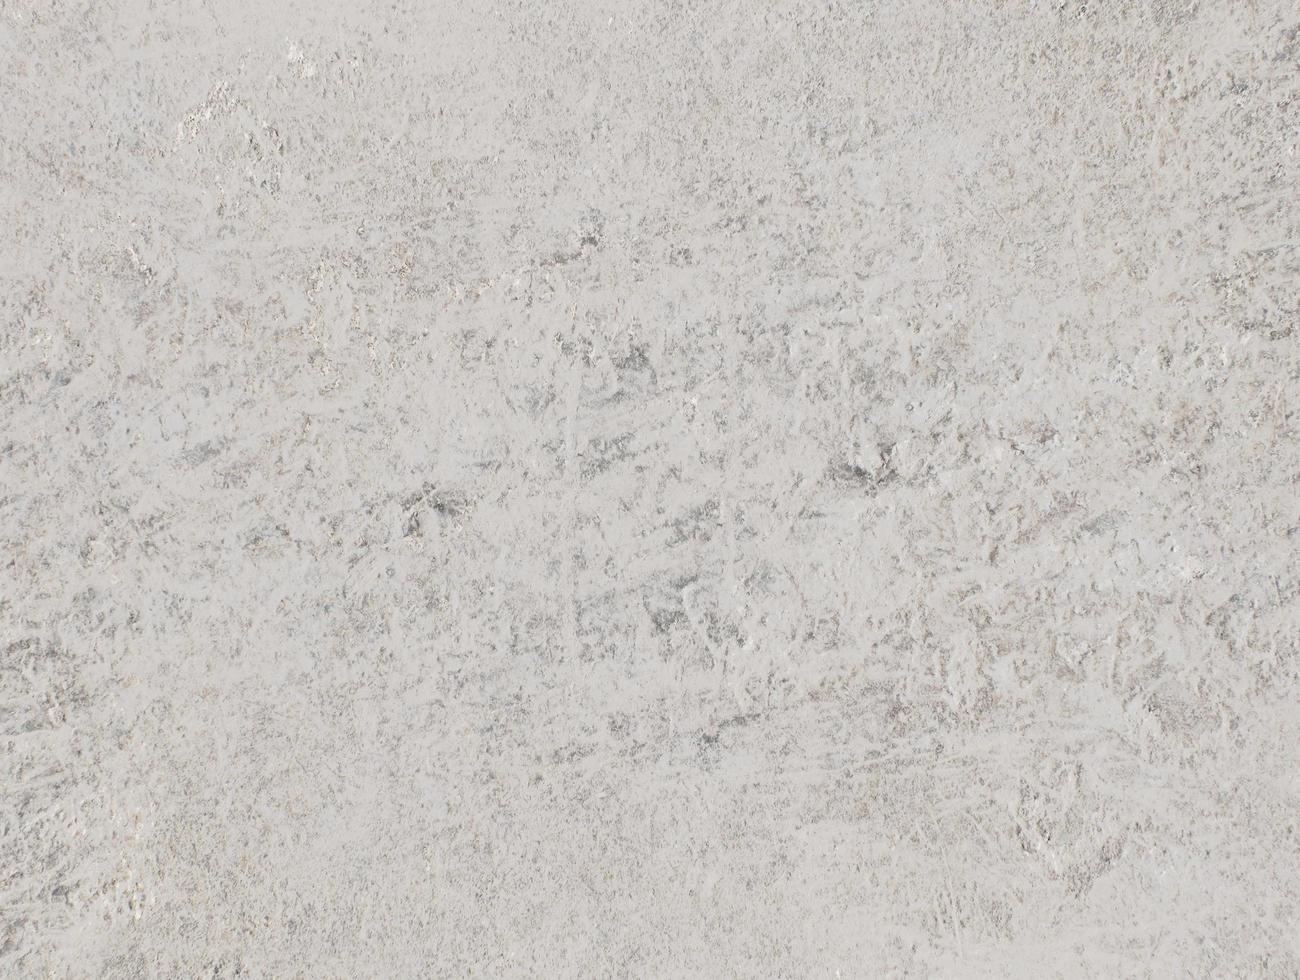 Grunge concrete wall texture photo